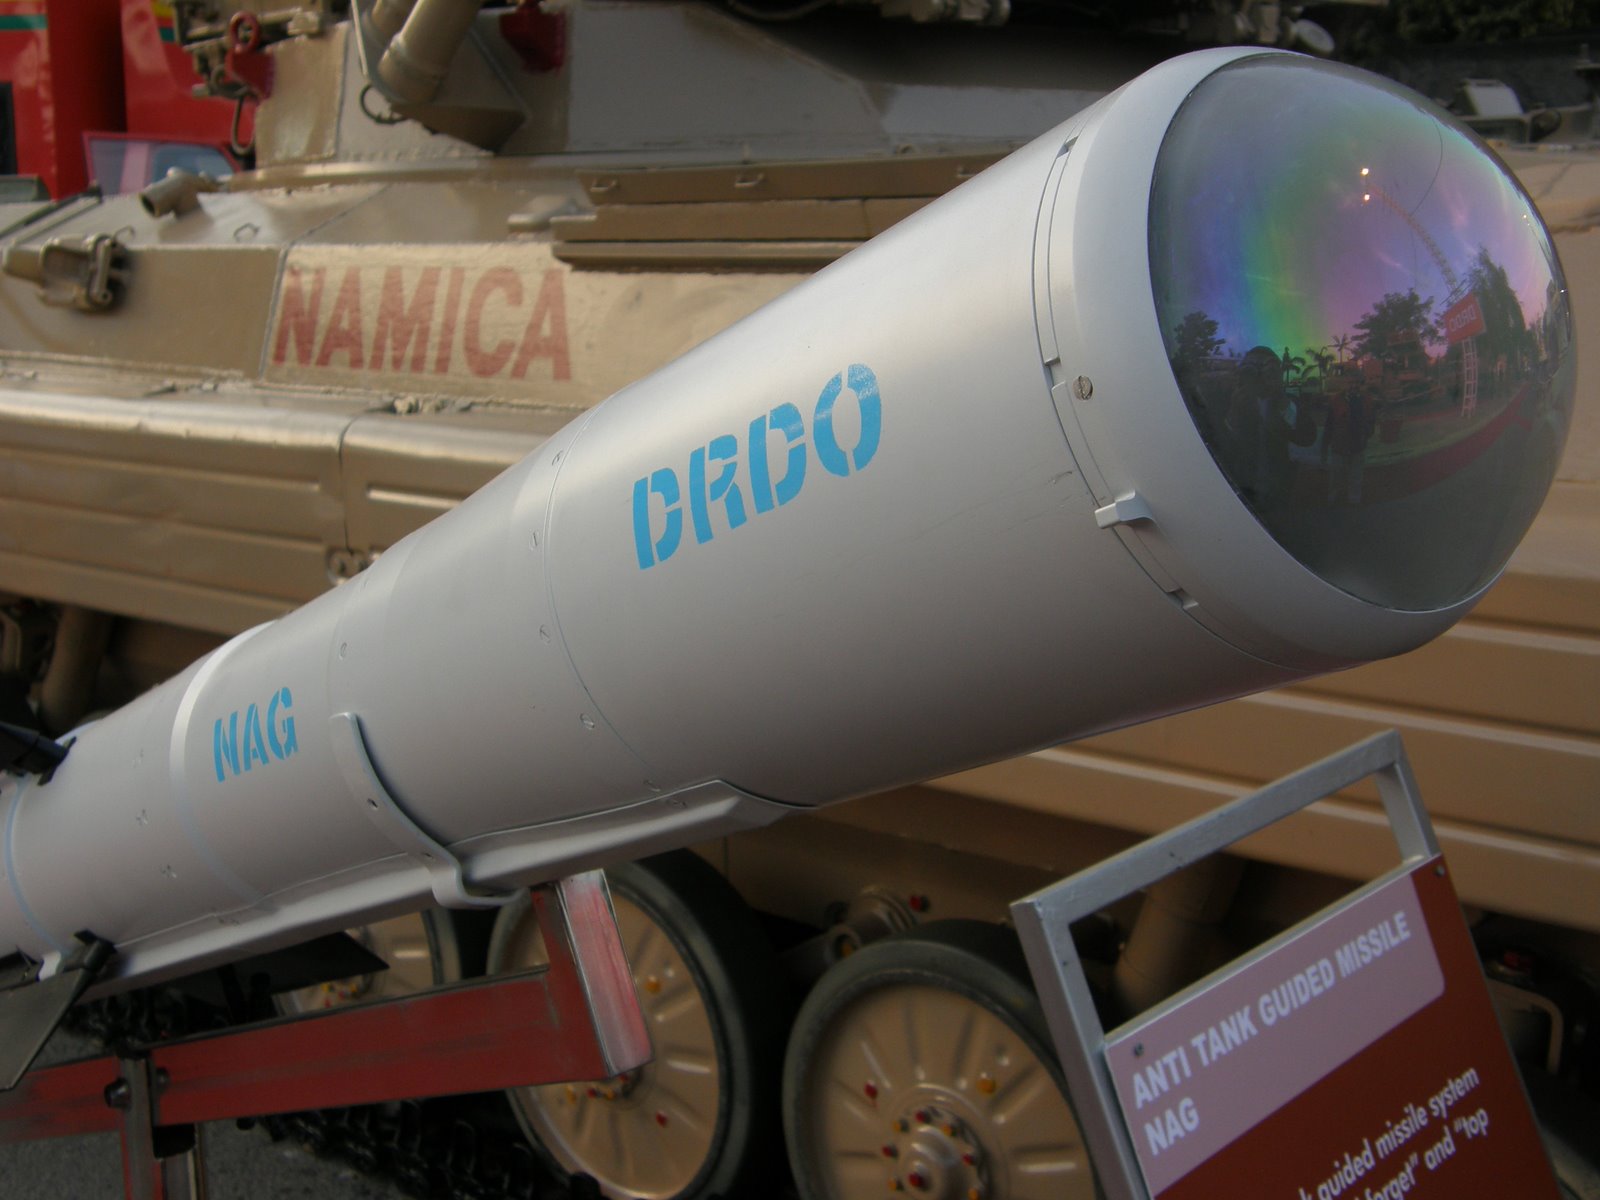 Nag anti-tank guided missile